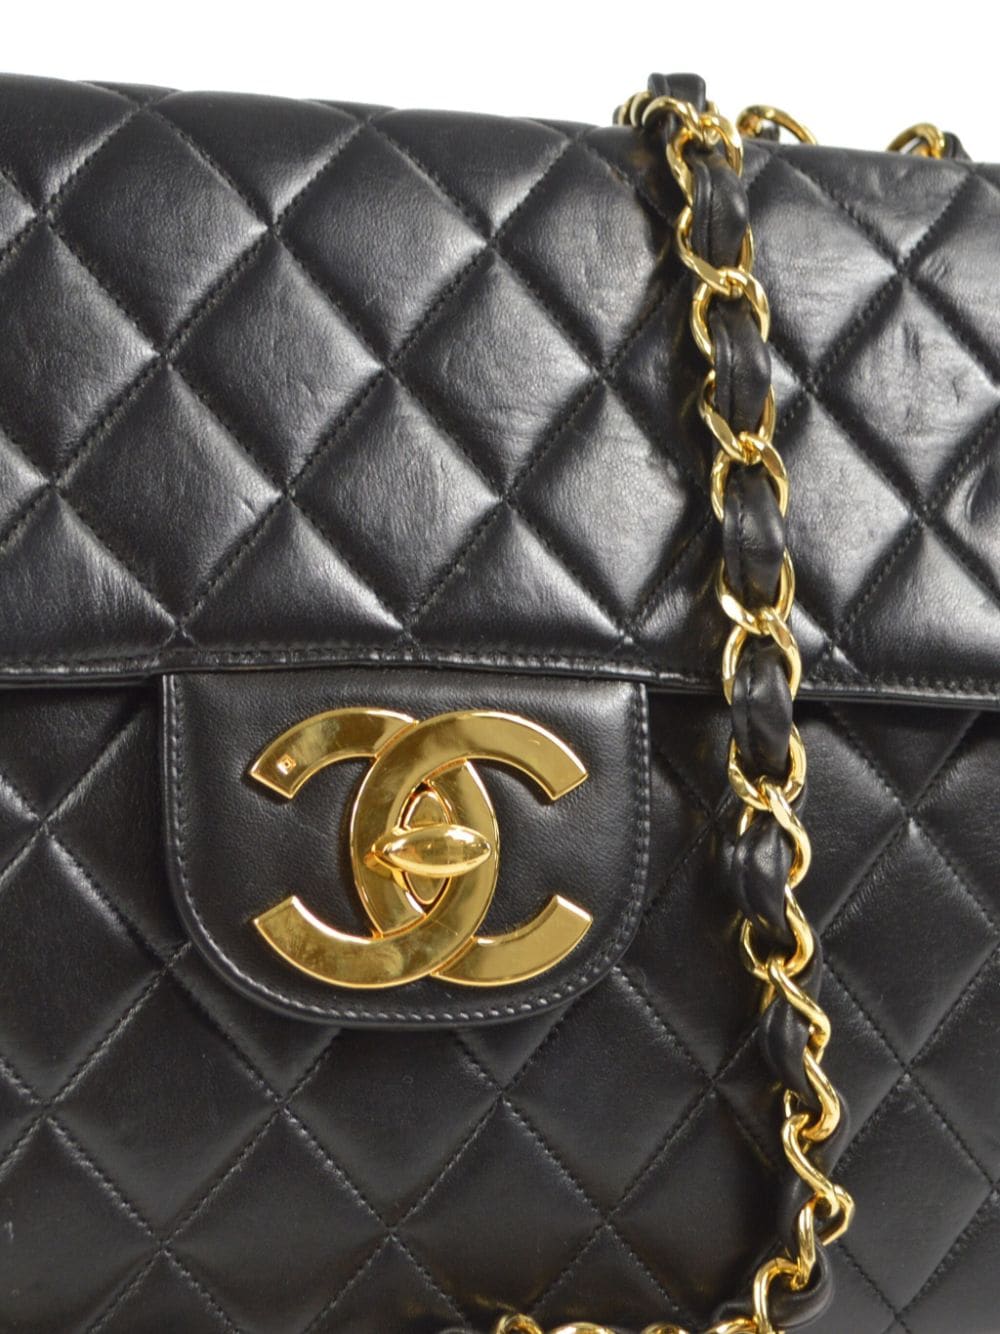 1995 Chanel Jumbo XL Maxi Black Quilted Lambskin Single Flap Handbag Purse